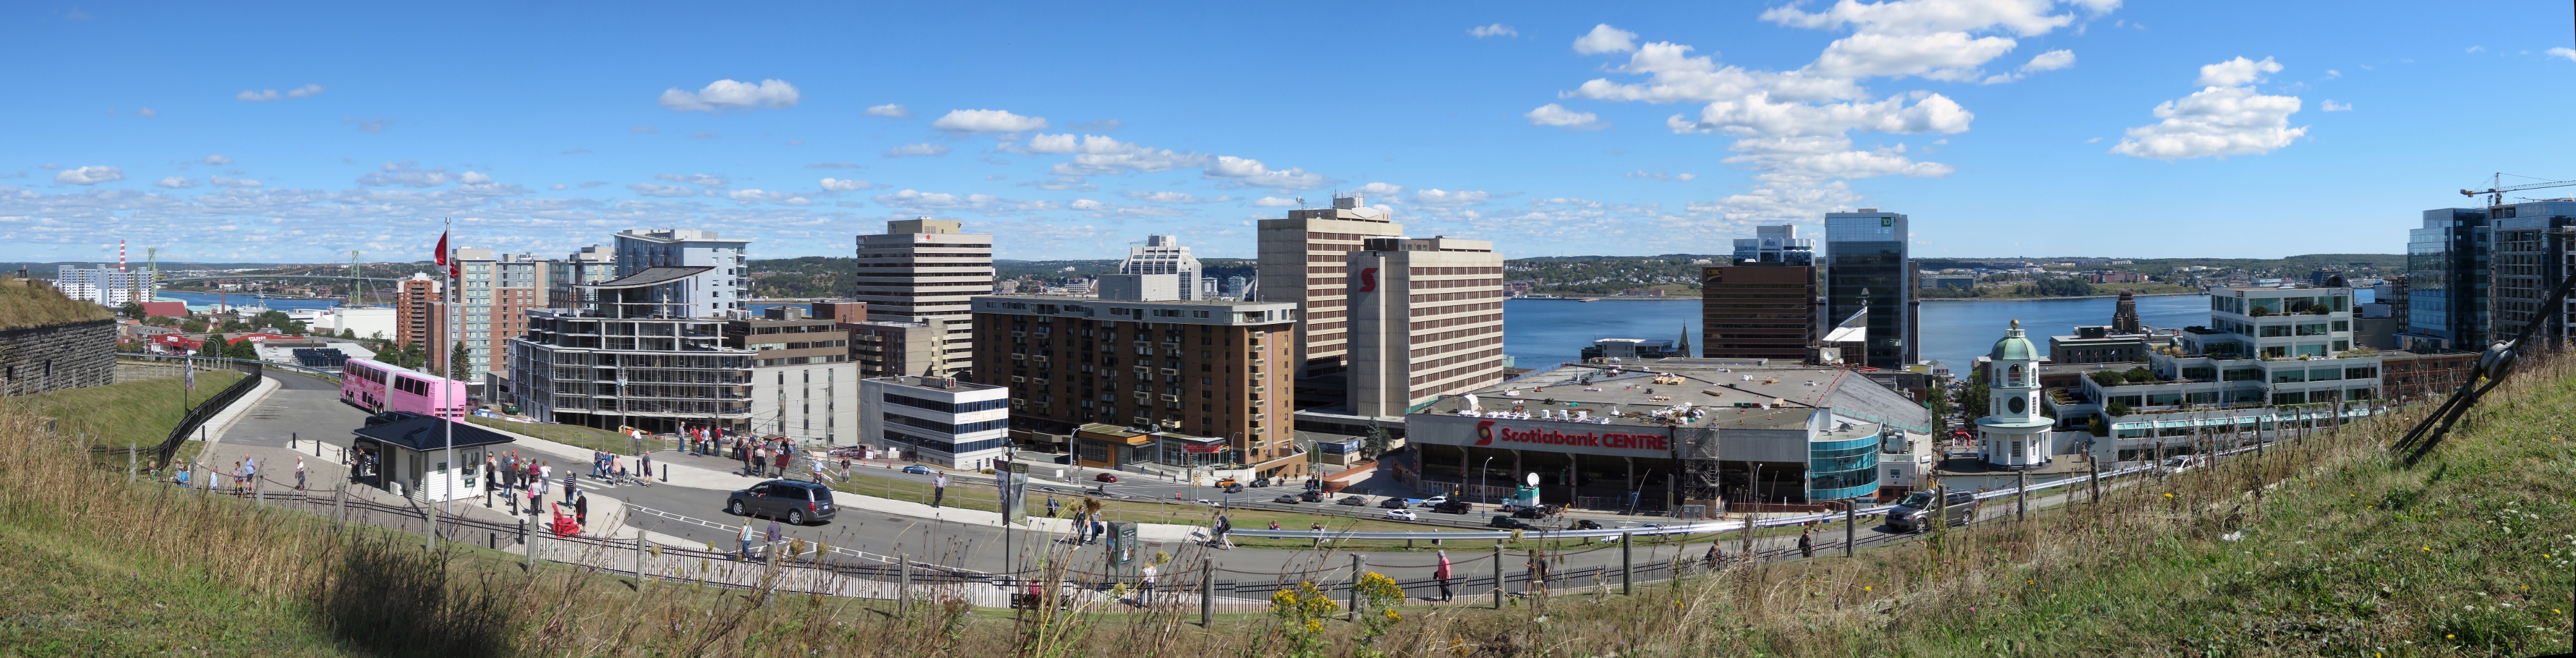 Building a better Mooseheads, City, Halifax, Nova Scotia